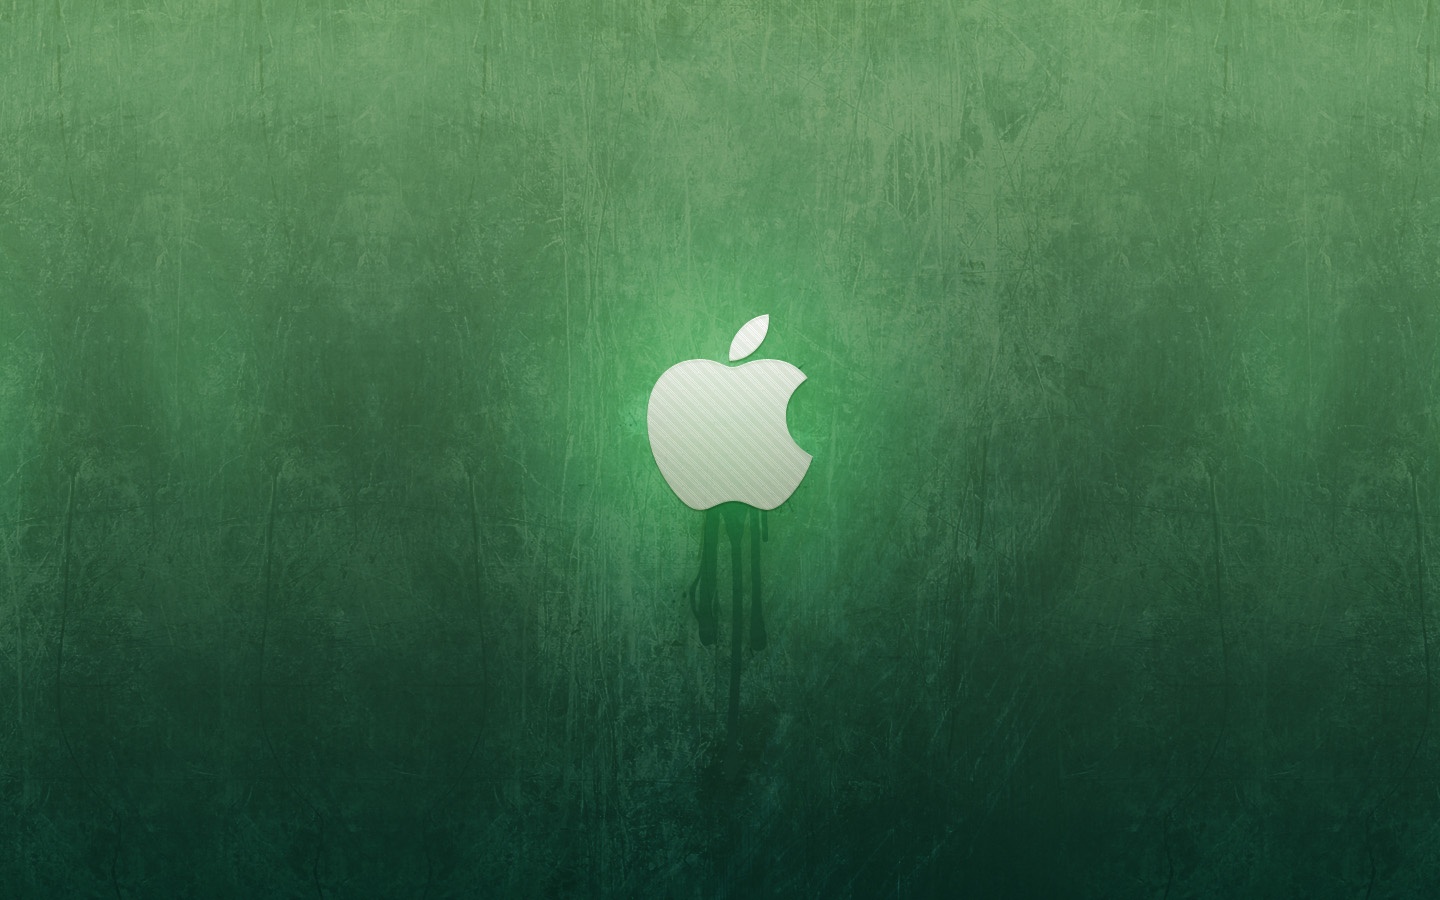 Green Apple Wallpaper Images - Free Download on Freepik